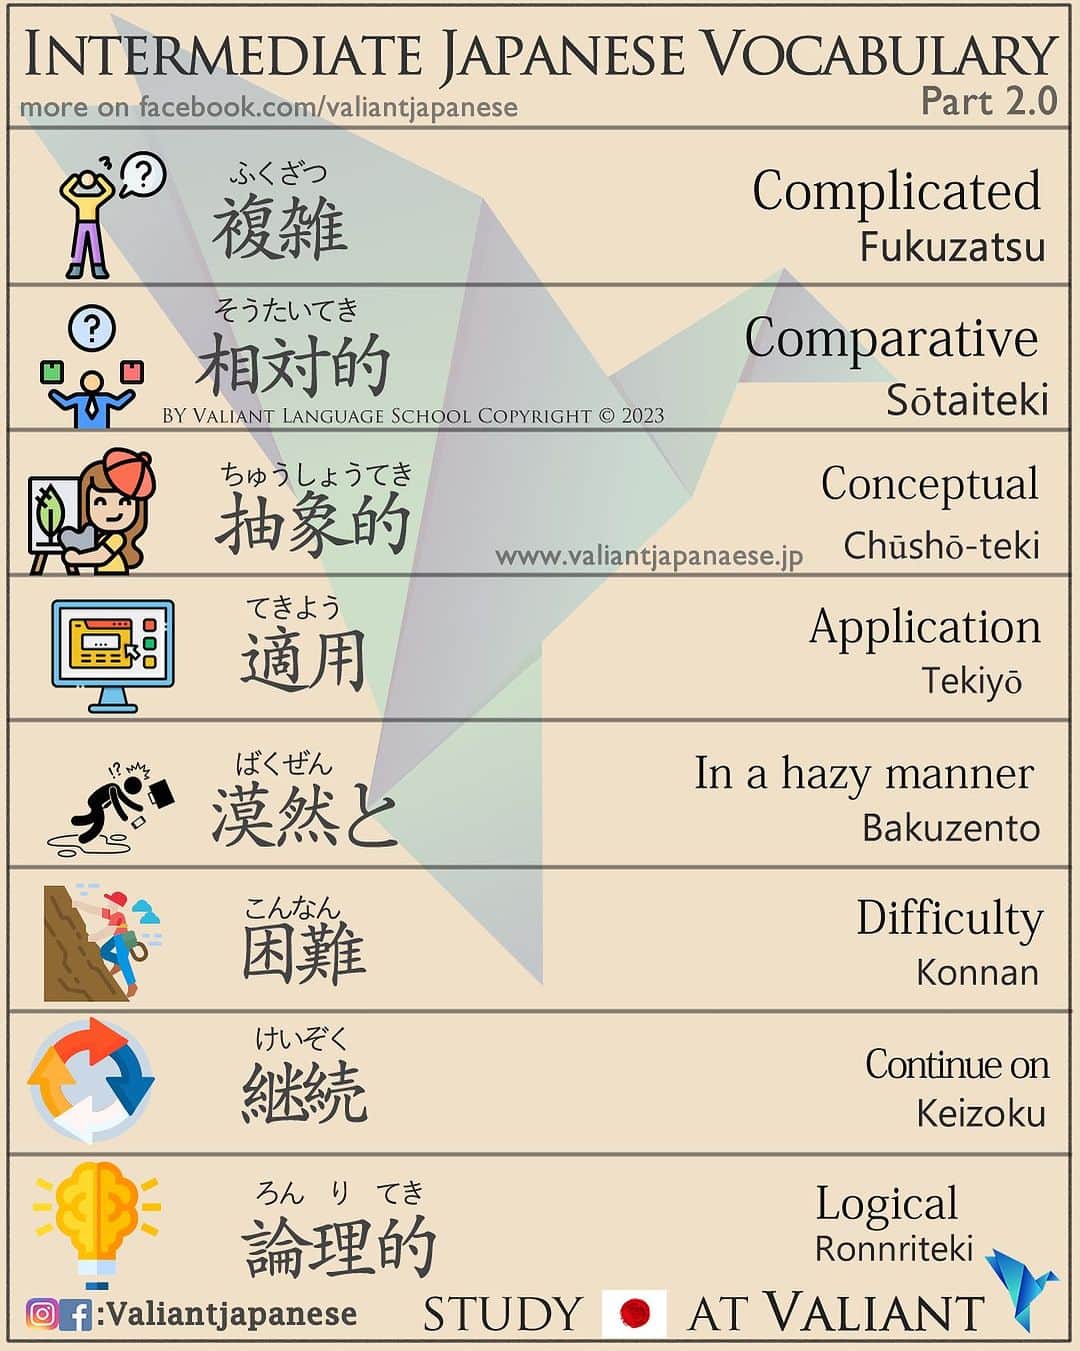 Valiant Language Schoolのインスタグラム：「Example Sentences below 👇 DM us to Start Learning Japanese!  ⛩📓: Intermediate Level Japanese 2.0 . 	1.	複雑 (Fukuzatsu) - Meaning: “complex” or “complicated” 	•	Example Sentence: この問題は非常に複雑です。 (Kono mondai wa hijou ni fukuzatsu desu.) 	•	Translation: This problem is extremely complicated. 	2.	相対的 (Soutaiteki) - Meaning: “relative” or “comparative” 	•	Example Sentence: 彼の成功は相対的に評価されるべきです。 (Kare no seikou wa soutaiteki ni hyouka sareru beki desu.) 	•	Translation: His success should be evaluated relatively. 	3.	抽象的 (Chuushouteki) - Meaning: “abstract” or “conceptual” 	•	Example Sentence: 彼女のアートは抽象的なアプローチを取っています。 (Kanojo no aato wa chuushouteki na apuroochi o totteimasu.) 	•	Translation: Her art takes an abstract approach. 	4.	適用 (Tekiyou) - Meaning: “application” or “implementation” 	•	Example Sentence: この法律はどのように適用されますか？ (Kono houritsu wa dono you ni tekiyou saremasu ka?) 	•	Translation: How is this law applied? 	5.	漠然と (Bakuzen to) - Meaning: “vaguely” or “in a hazy manner” 	•	Example Sentence: 彼の計画は漠然としか考えていないようです。 (Kare no keikaku wa bakuzen to shika kangaete inai you desu.) 	•	Translation: It seems like he’s only thinking vaguely about his plan. 	6.	困難 (Konnan) - Meaning: “difficulty” or “hardship” 	•	Example Sentence: このプロジェクトは多くの困難に直面しています。 (Kono purojekuto wa ooku no konnan ni chokumen shiteimasu.) 	•	Translation: This project is facing many difficulties. 	7.	論理的 (Ronriteki) - Meaning: “logical” or “rational” 	•	Example Sentence: 彼の議論は論理的で説得力があります。 (Kare no giron wa ronriteki de settokuryoku ga arimasu.) 	•	Translation: His argument is logical and persuasive. 	8.	継続 (Keizoku) - Meaning: “continuation” or “sustaining” 	•	Example Sentence: 継続的な努力が成功の鍵です。 (Keizokuteki na doryoku ga seikou no kagi desu.) 	•	Translation: Continuous effort is the key to success.」